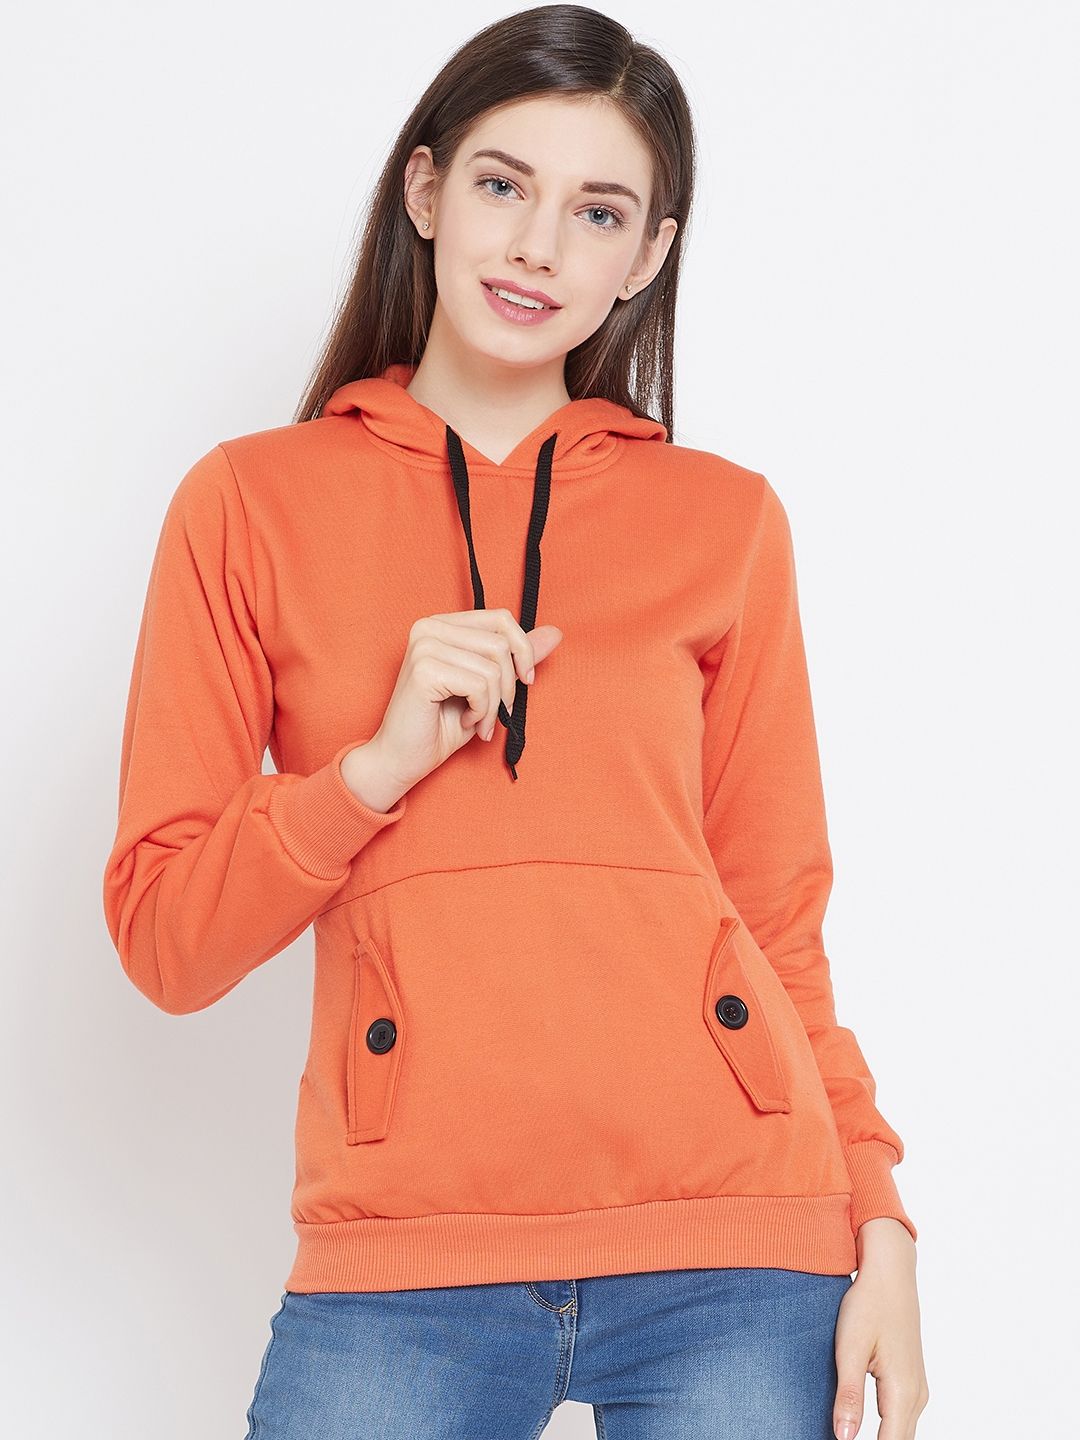 Belle Fille Women Orange Solid Hooded Sweatshirt Price in India